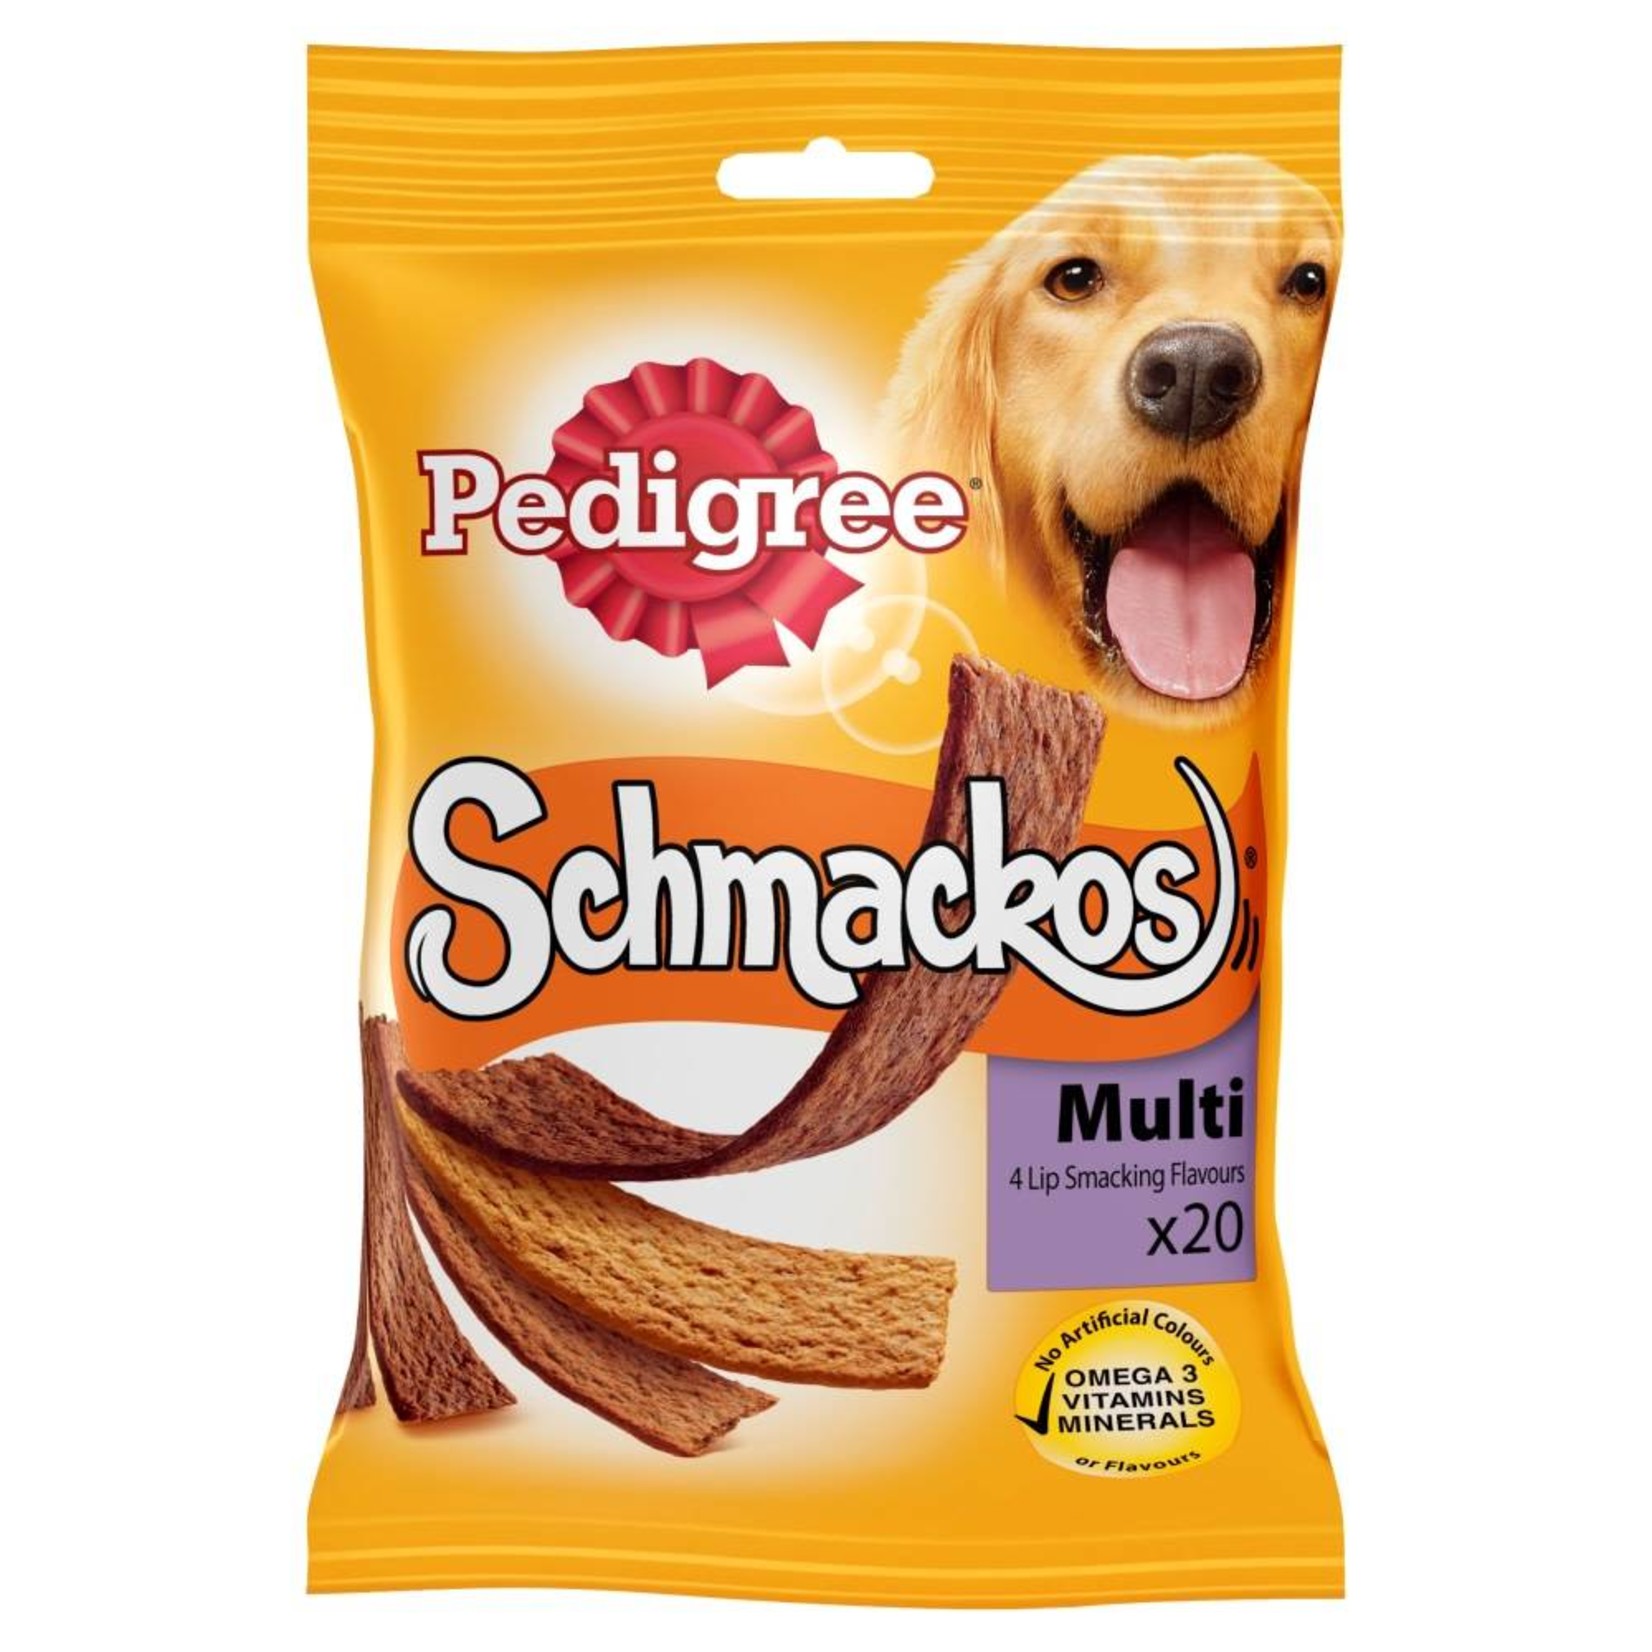 Pedigree Schmackos Dog Treats Meat Variety, 20 Sticks